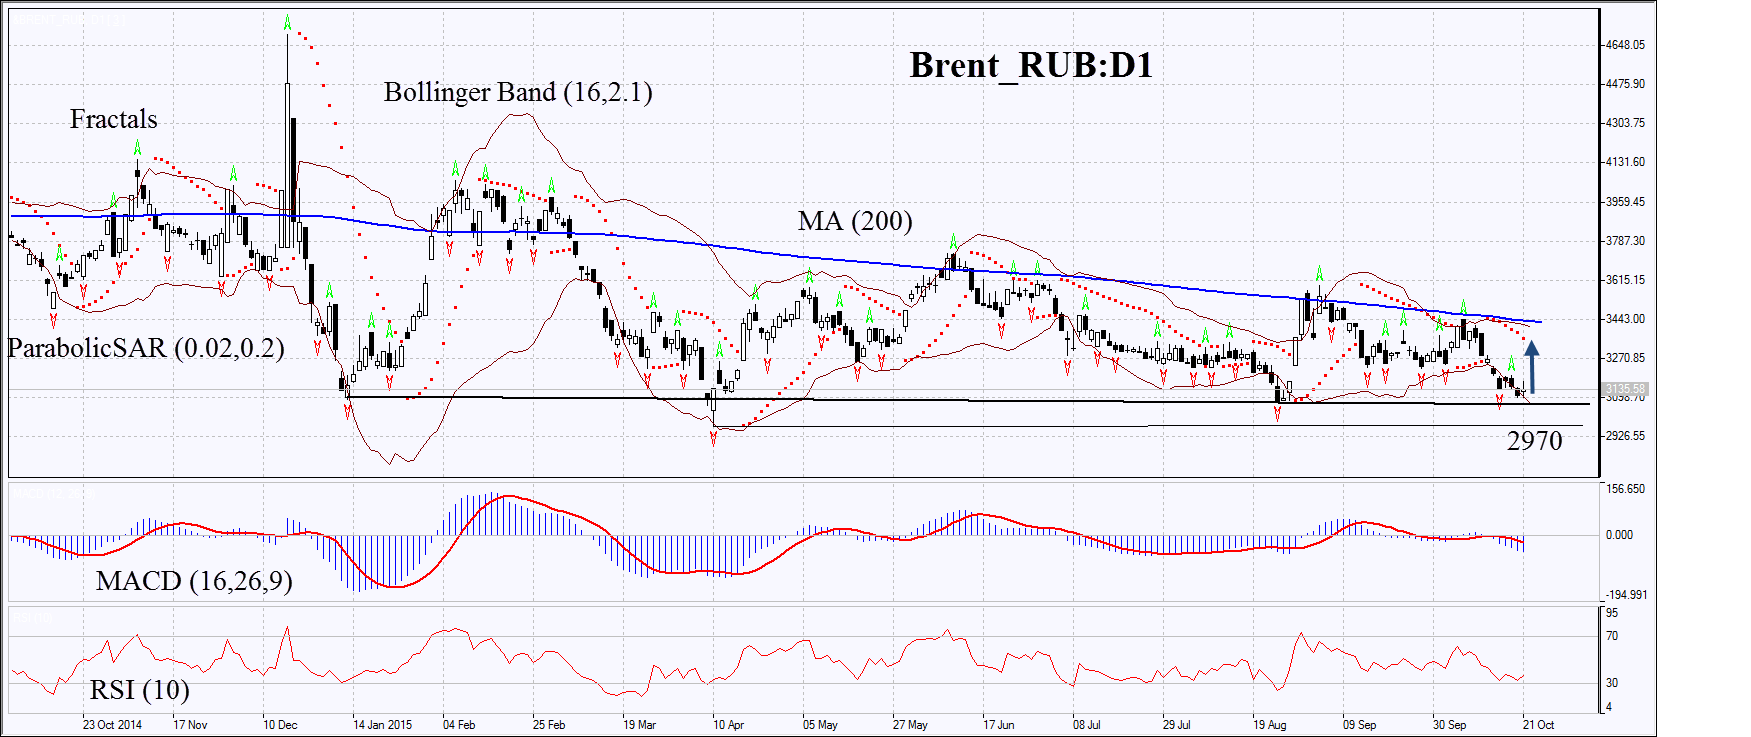 PCI Brent/RUB